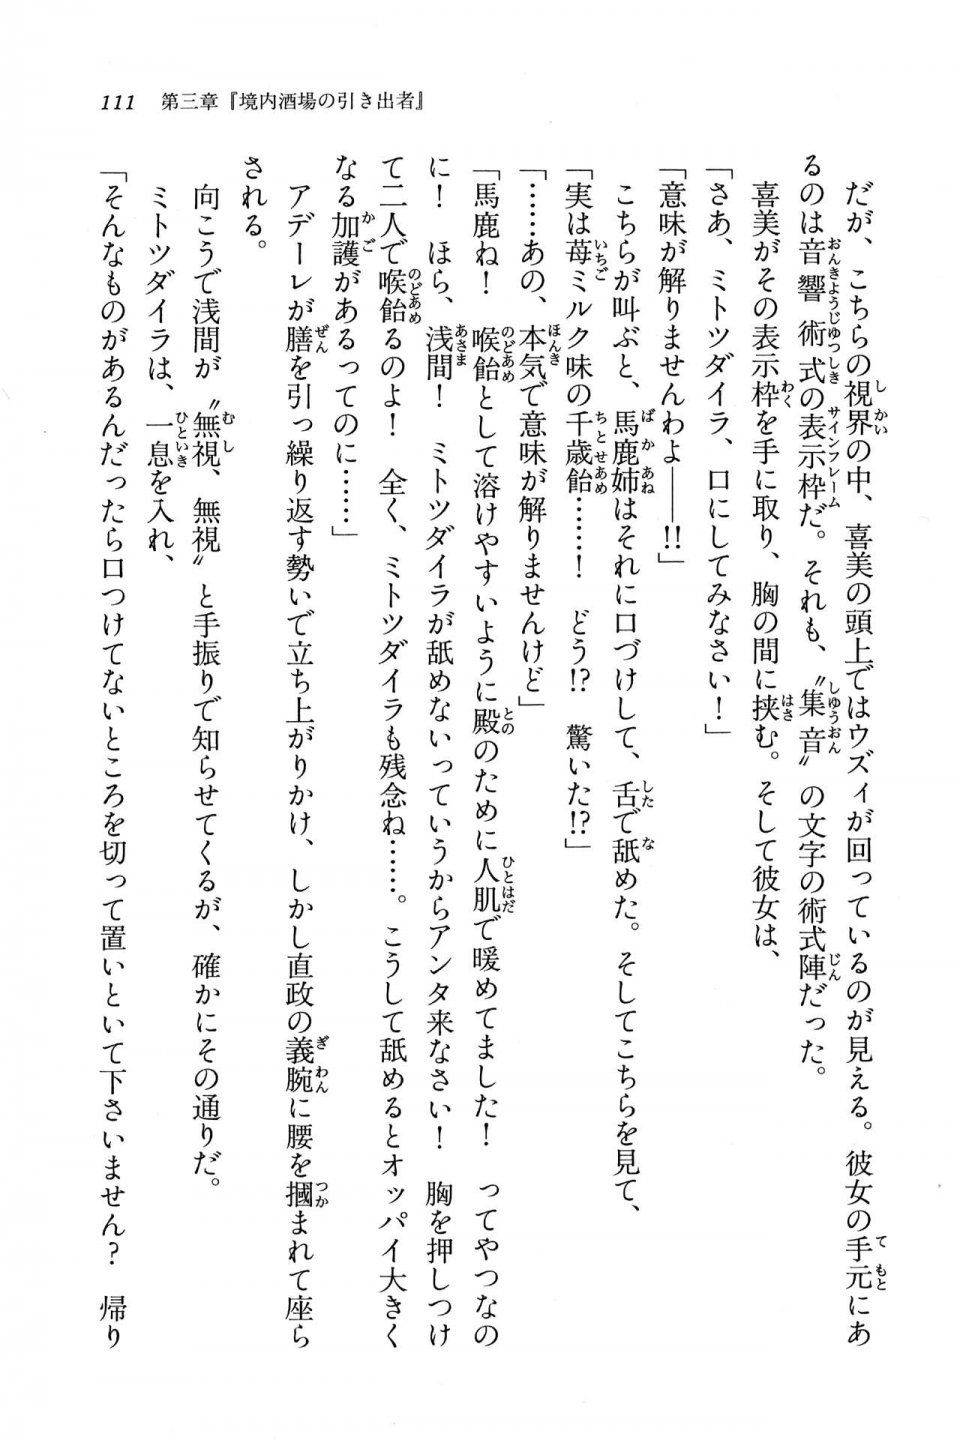 Kyoukai Senjou no Horizon BD Special Mininovel Vol 7(4A) - Photo #115